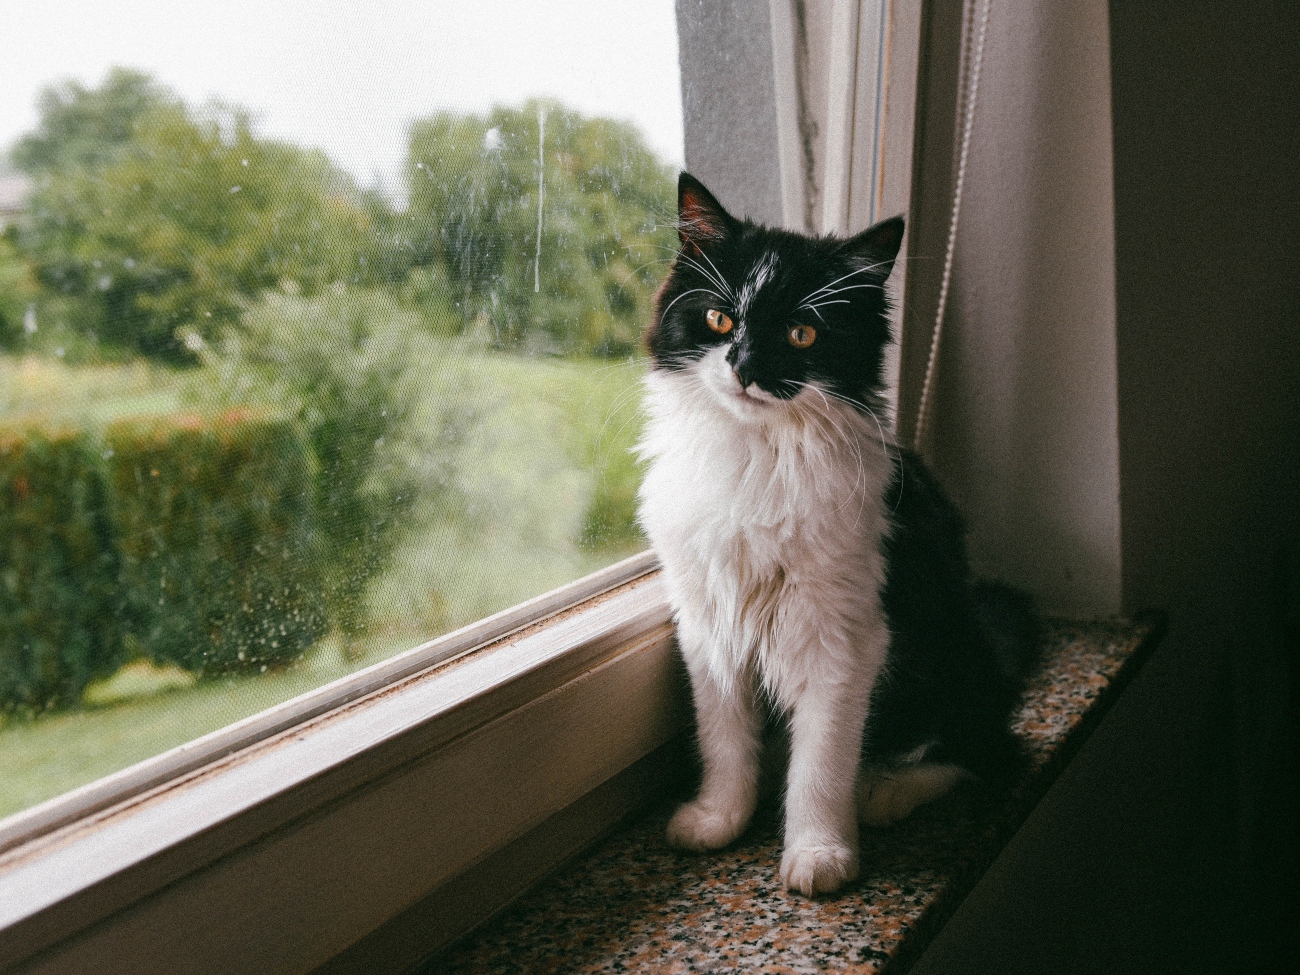 Cat on window sill